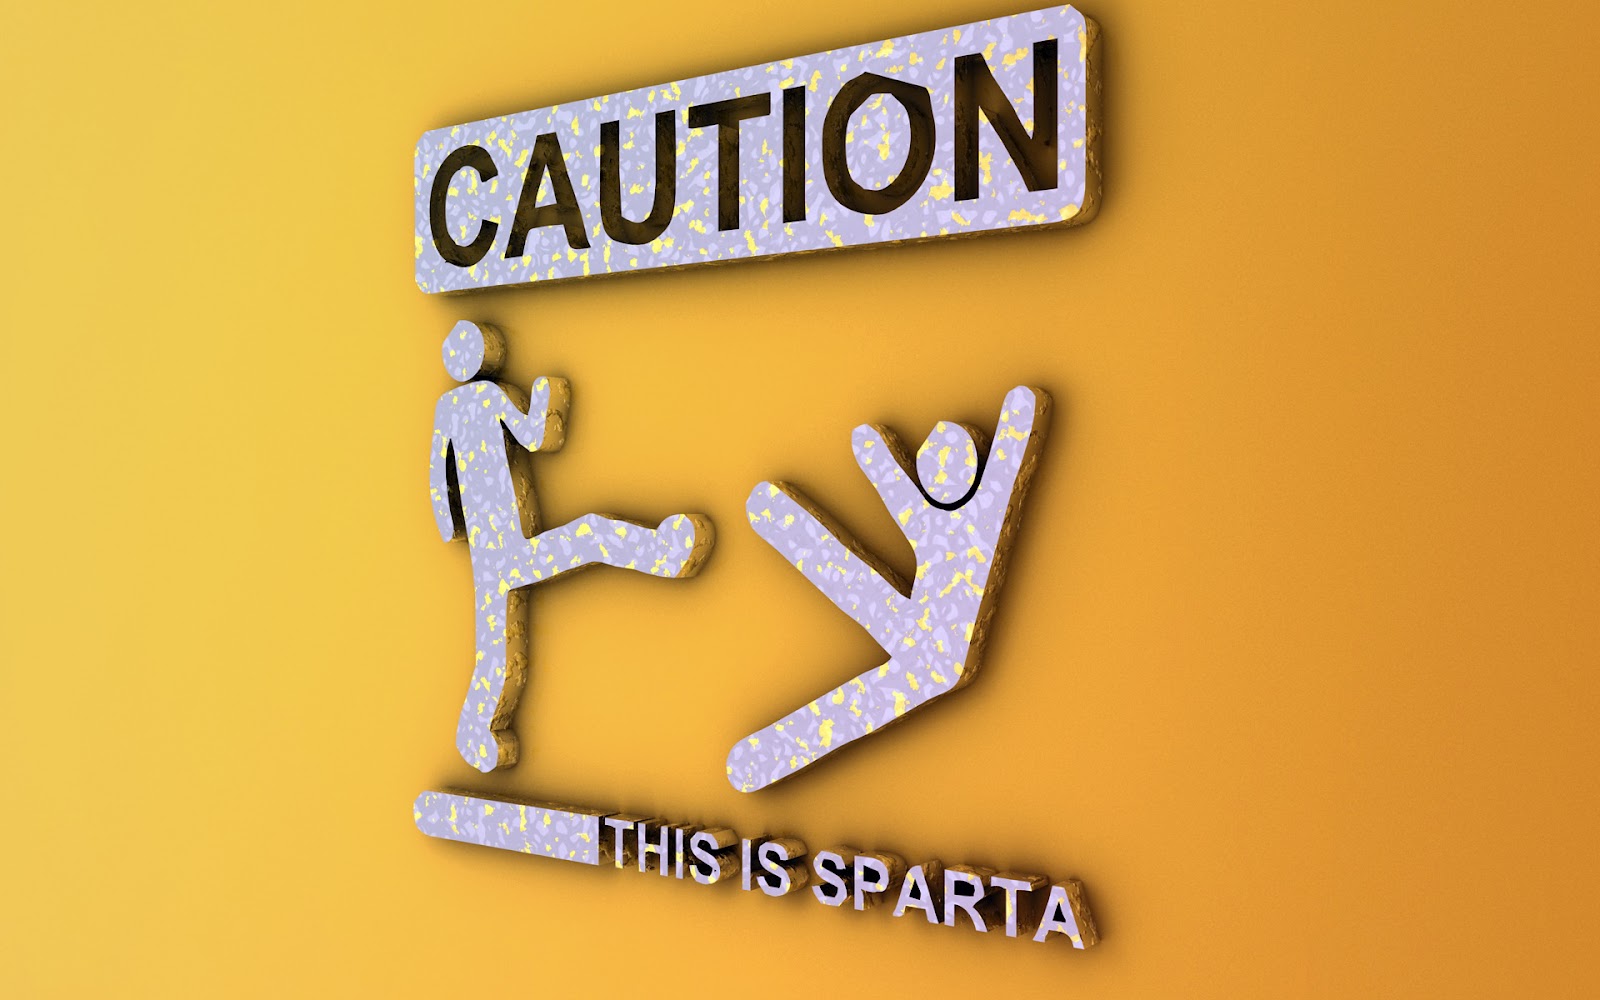 Caution_this_is_Sparta_v2_by_R0adki11.jpg